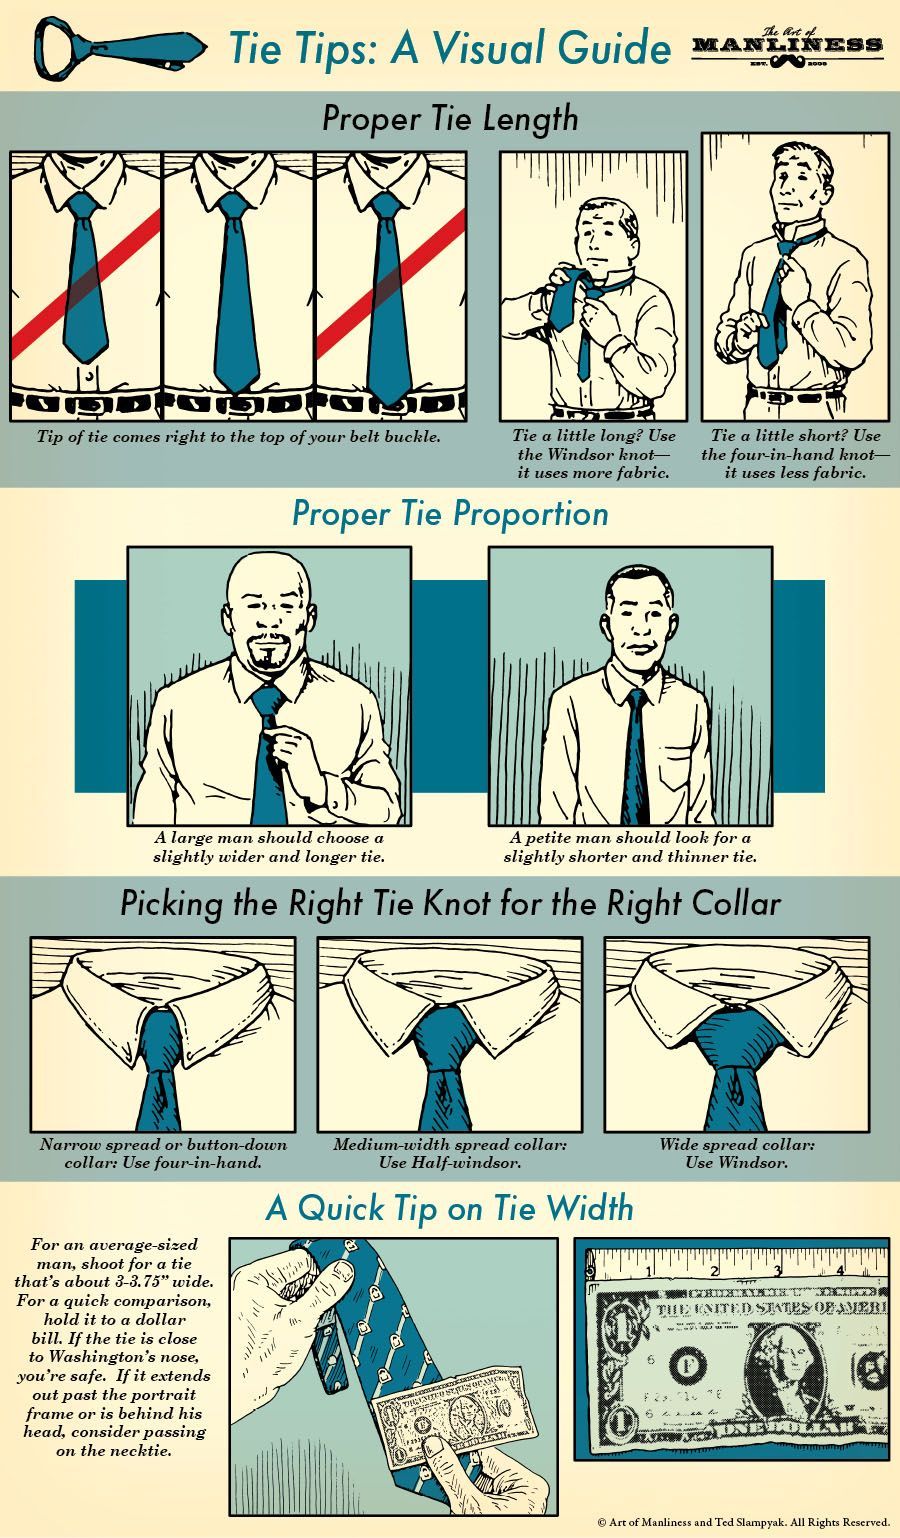 Necktie Tips for Men: A Visual Guide